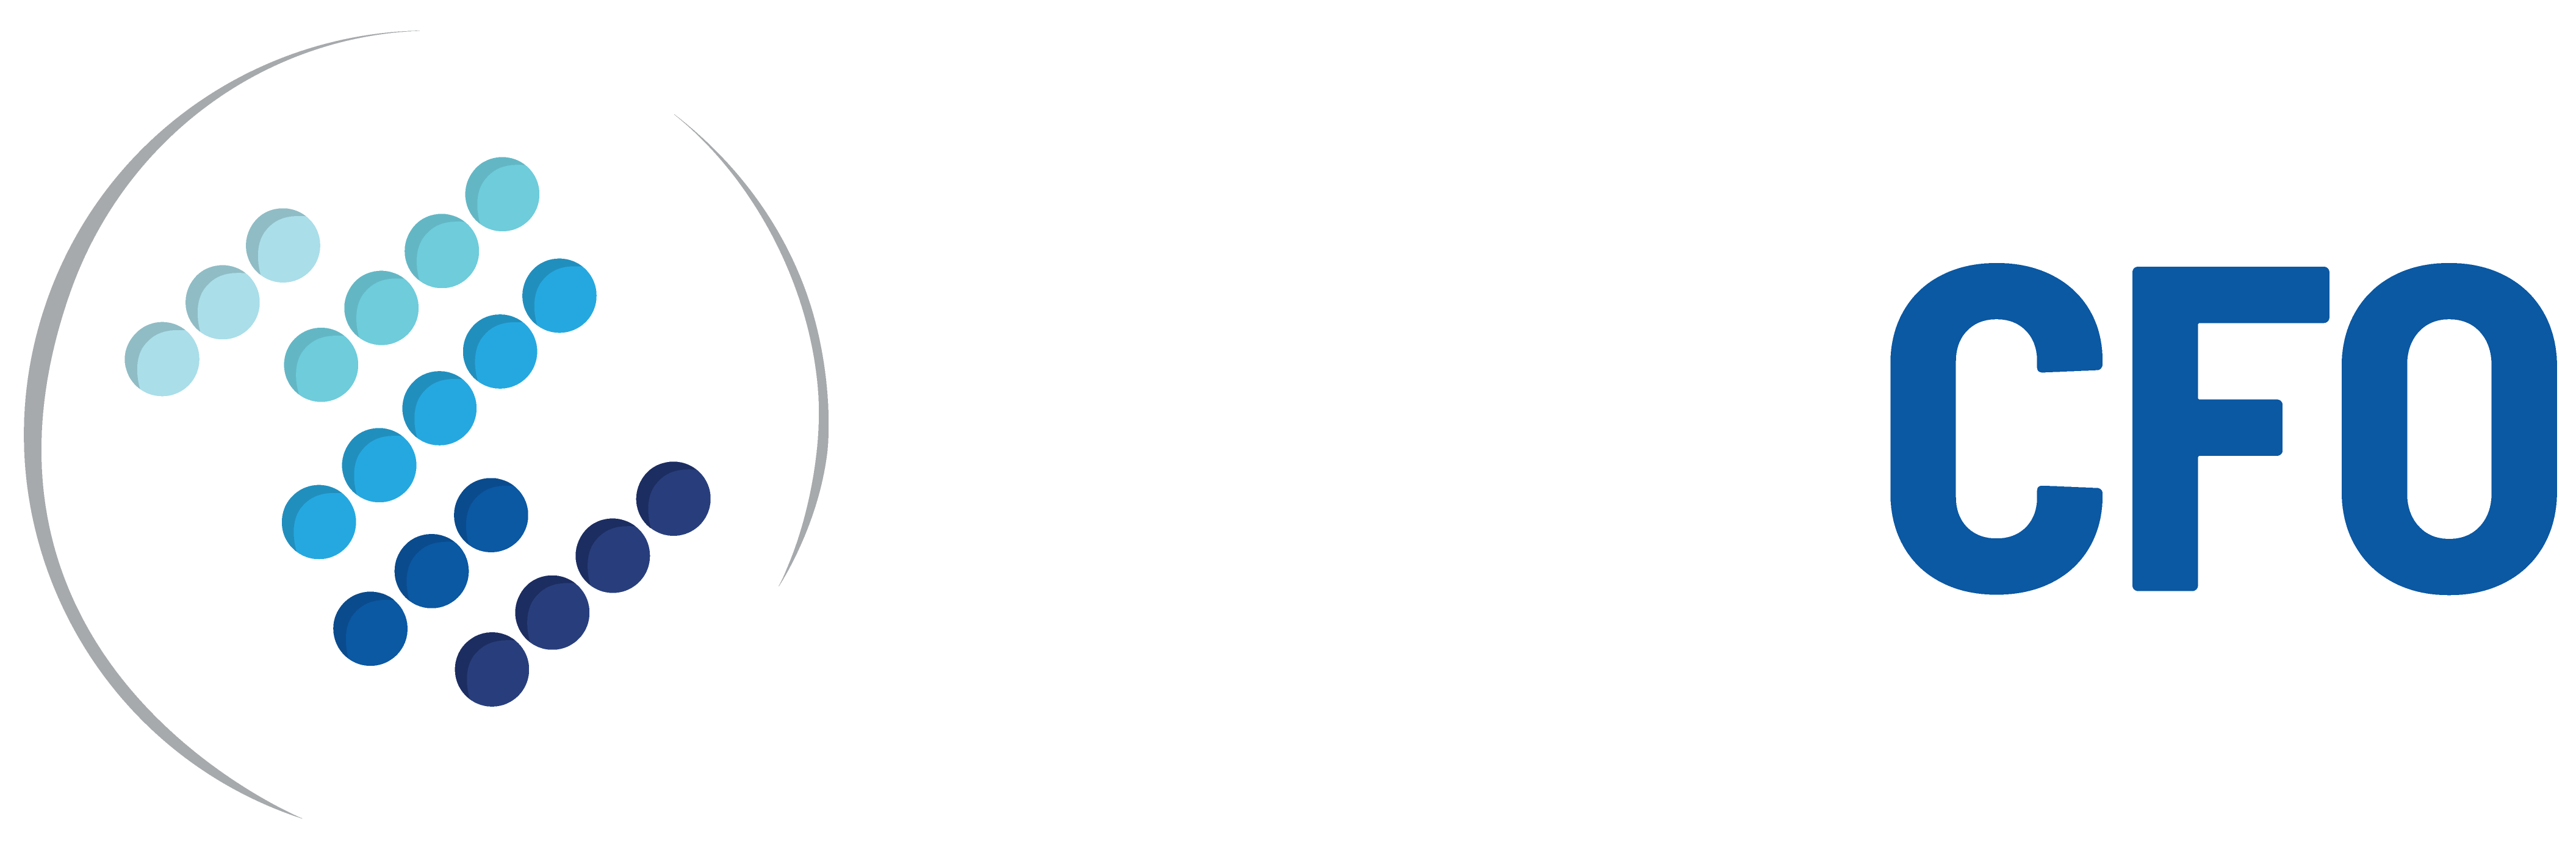 The Savvy Cycler